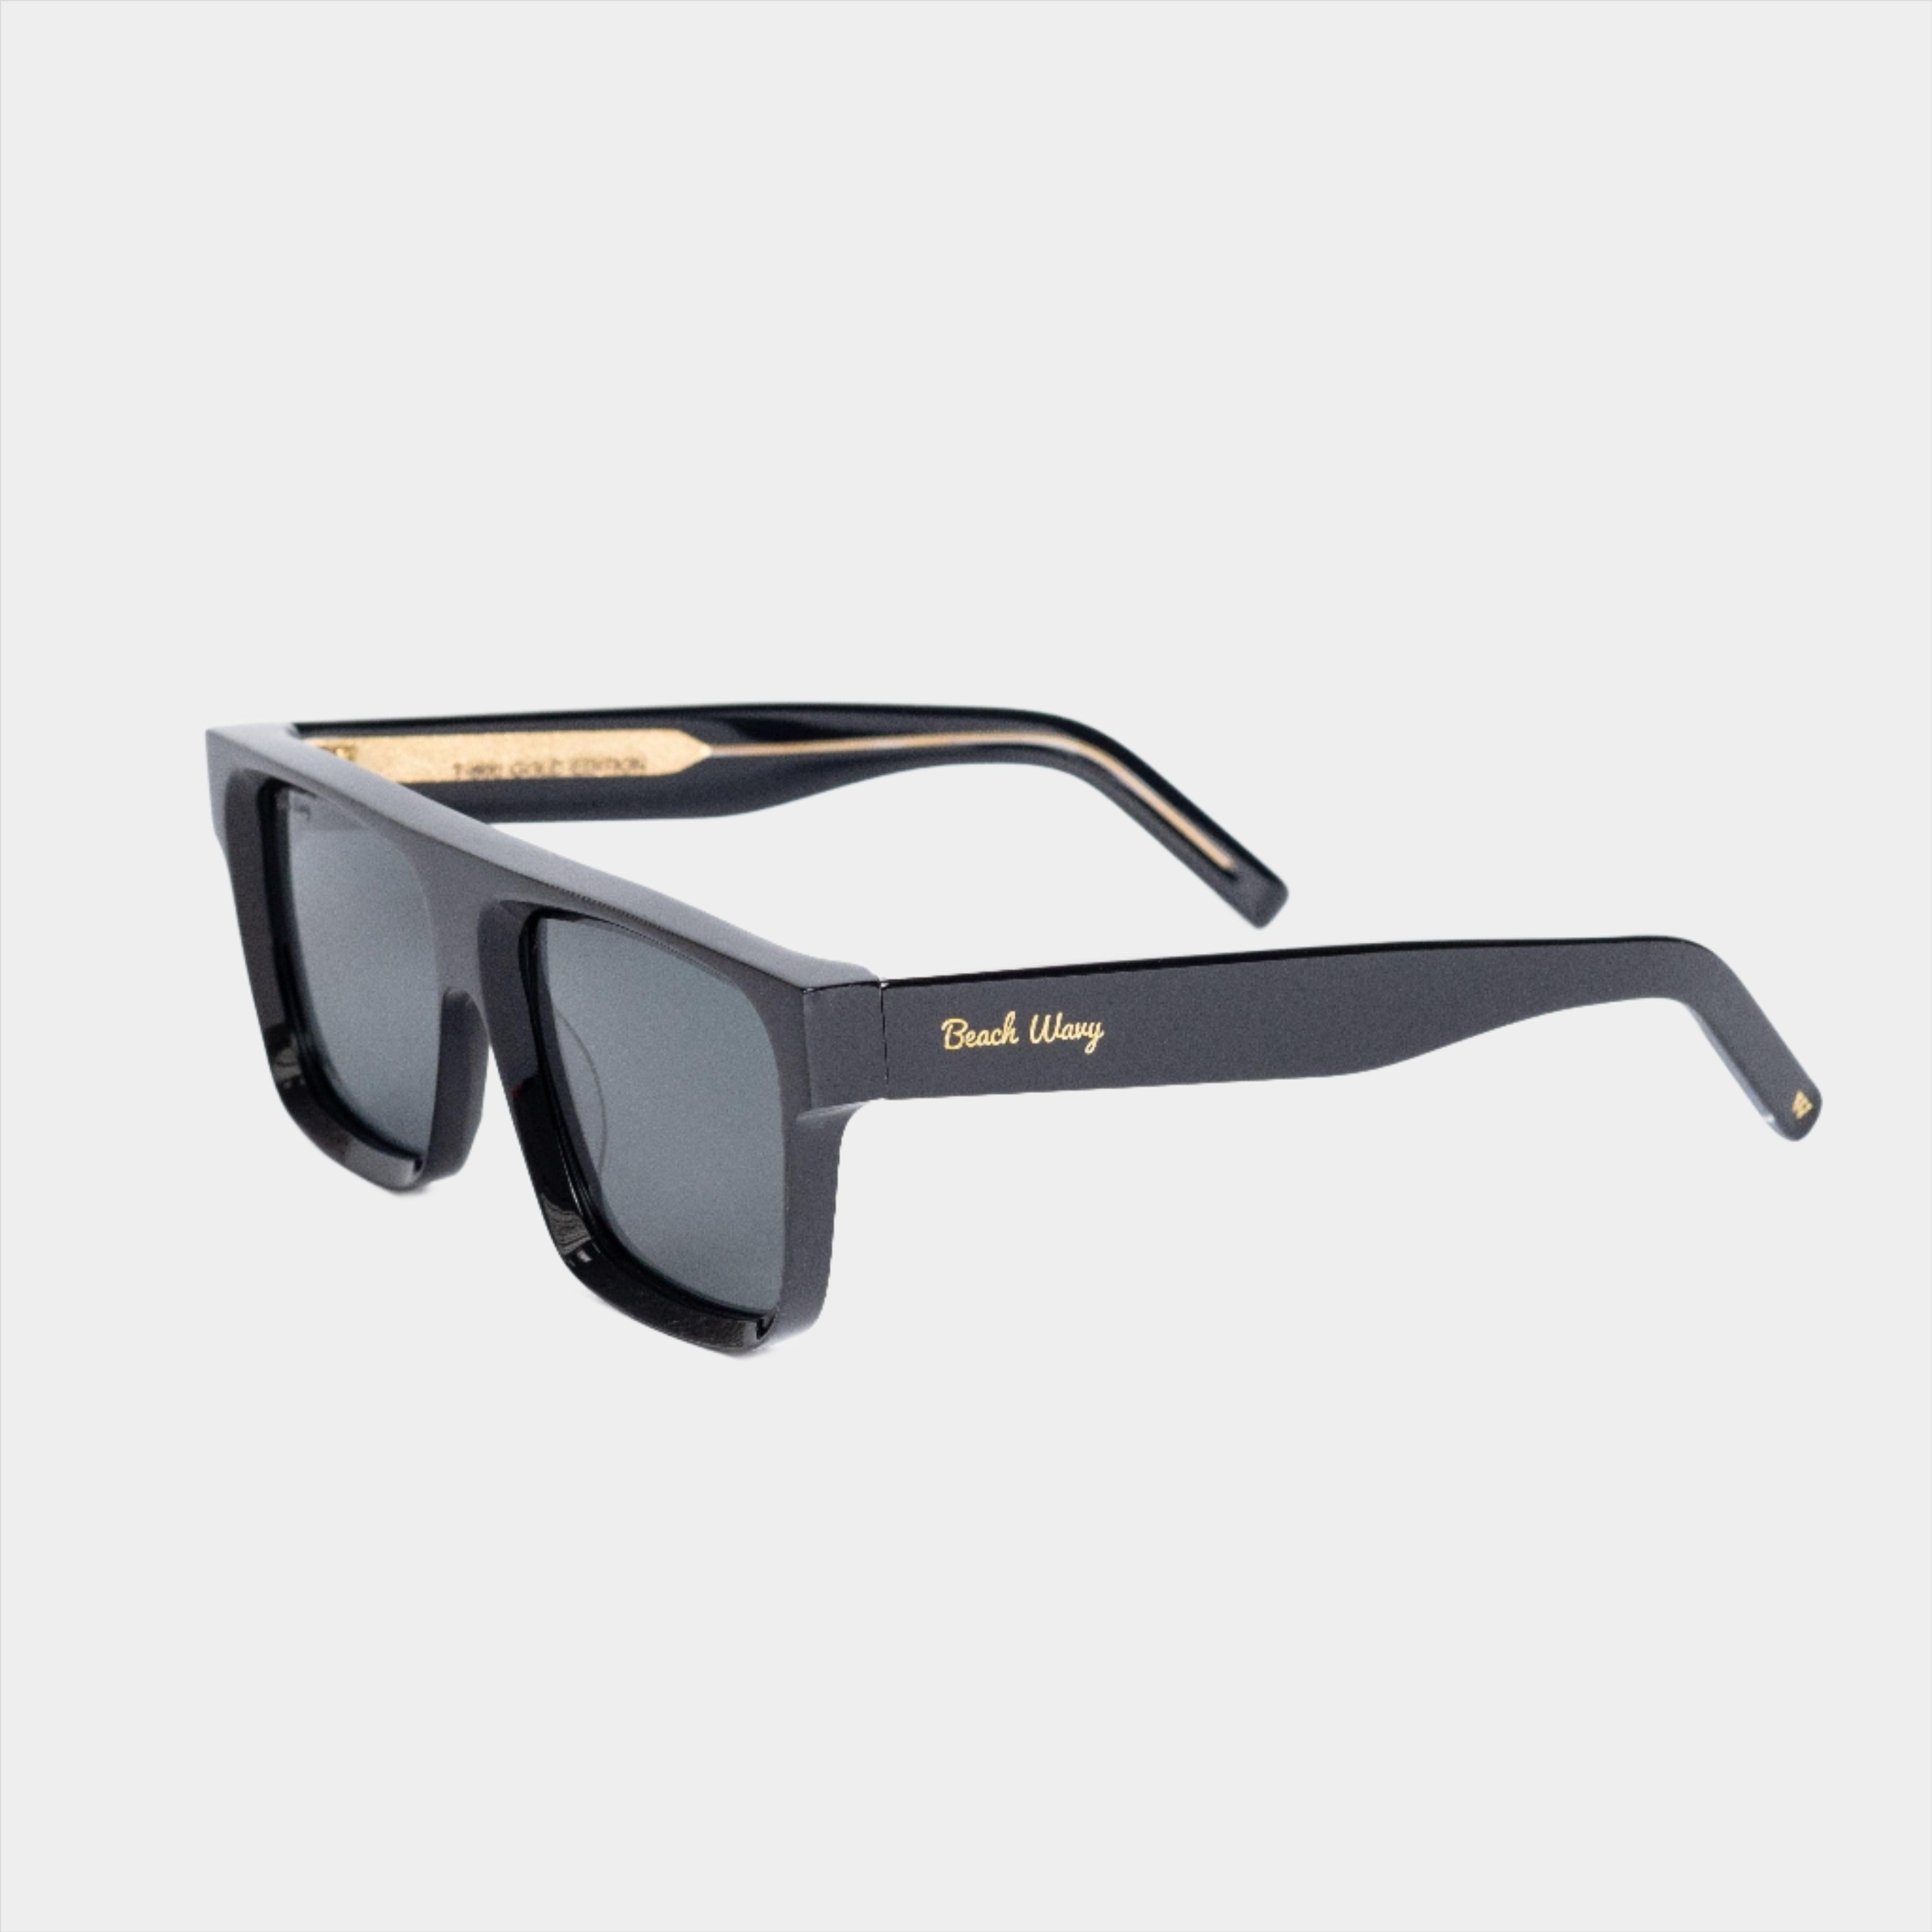 WALTER HILL BANKS | Black Flat Top Sunglasses | Polarized